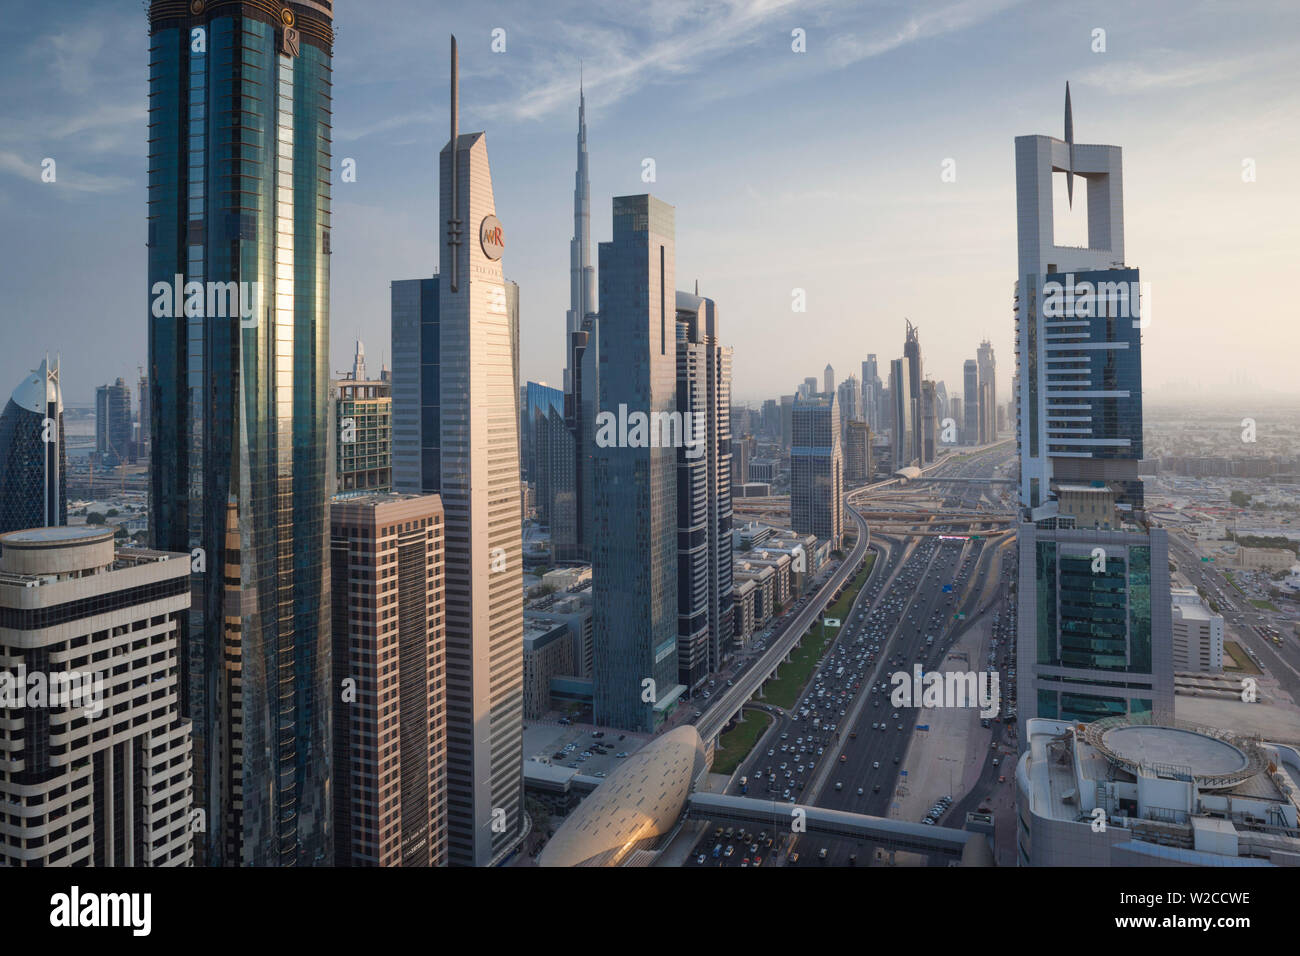 UAE, Dubai, Downtown Dubai, high rise buildings along Sheikh Zayed Road, elevated view, dusk Stock Photo